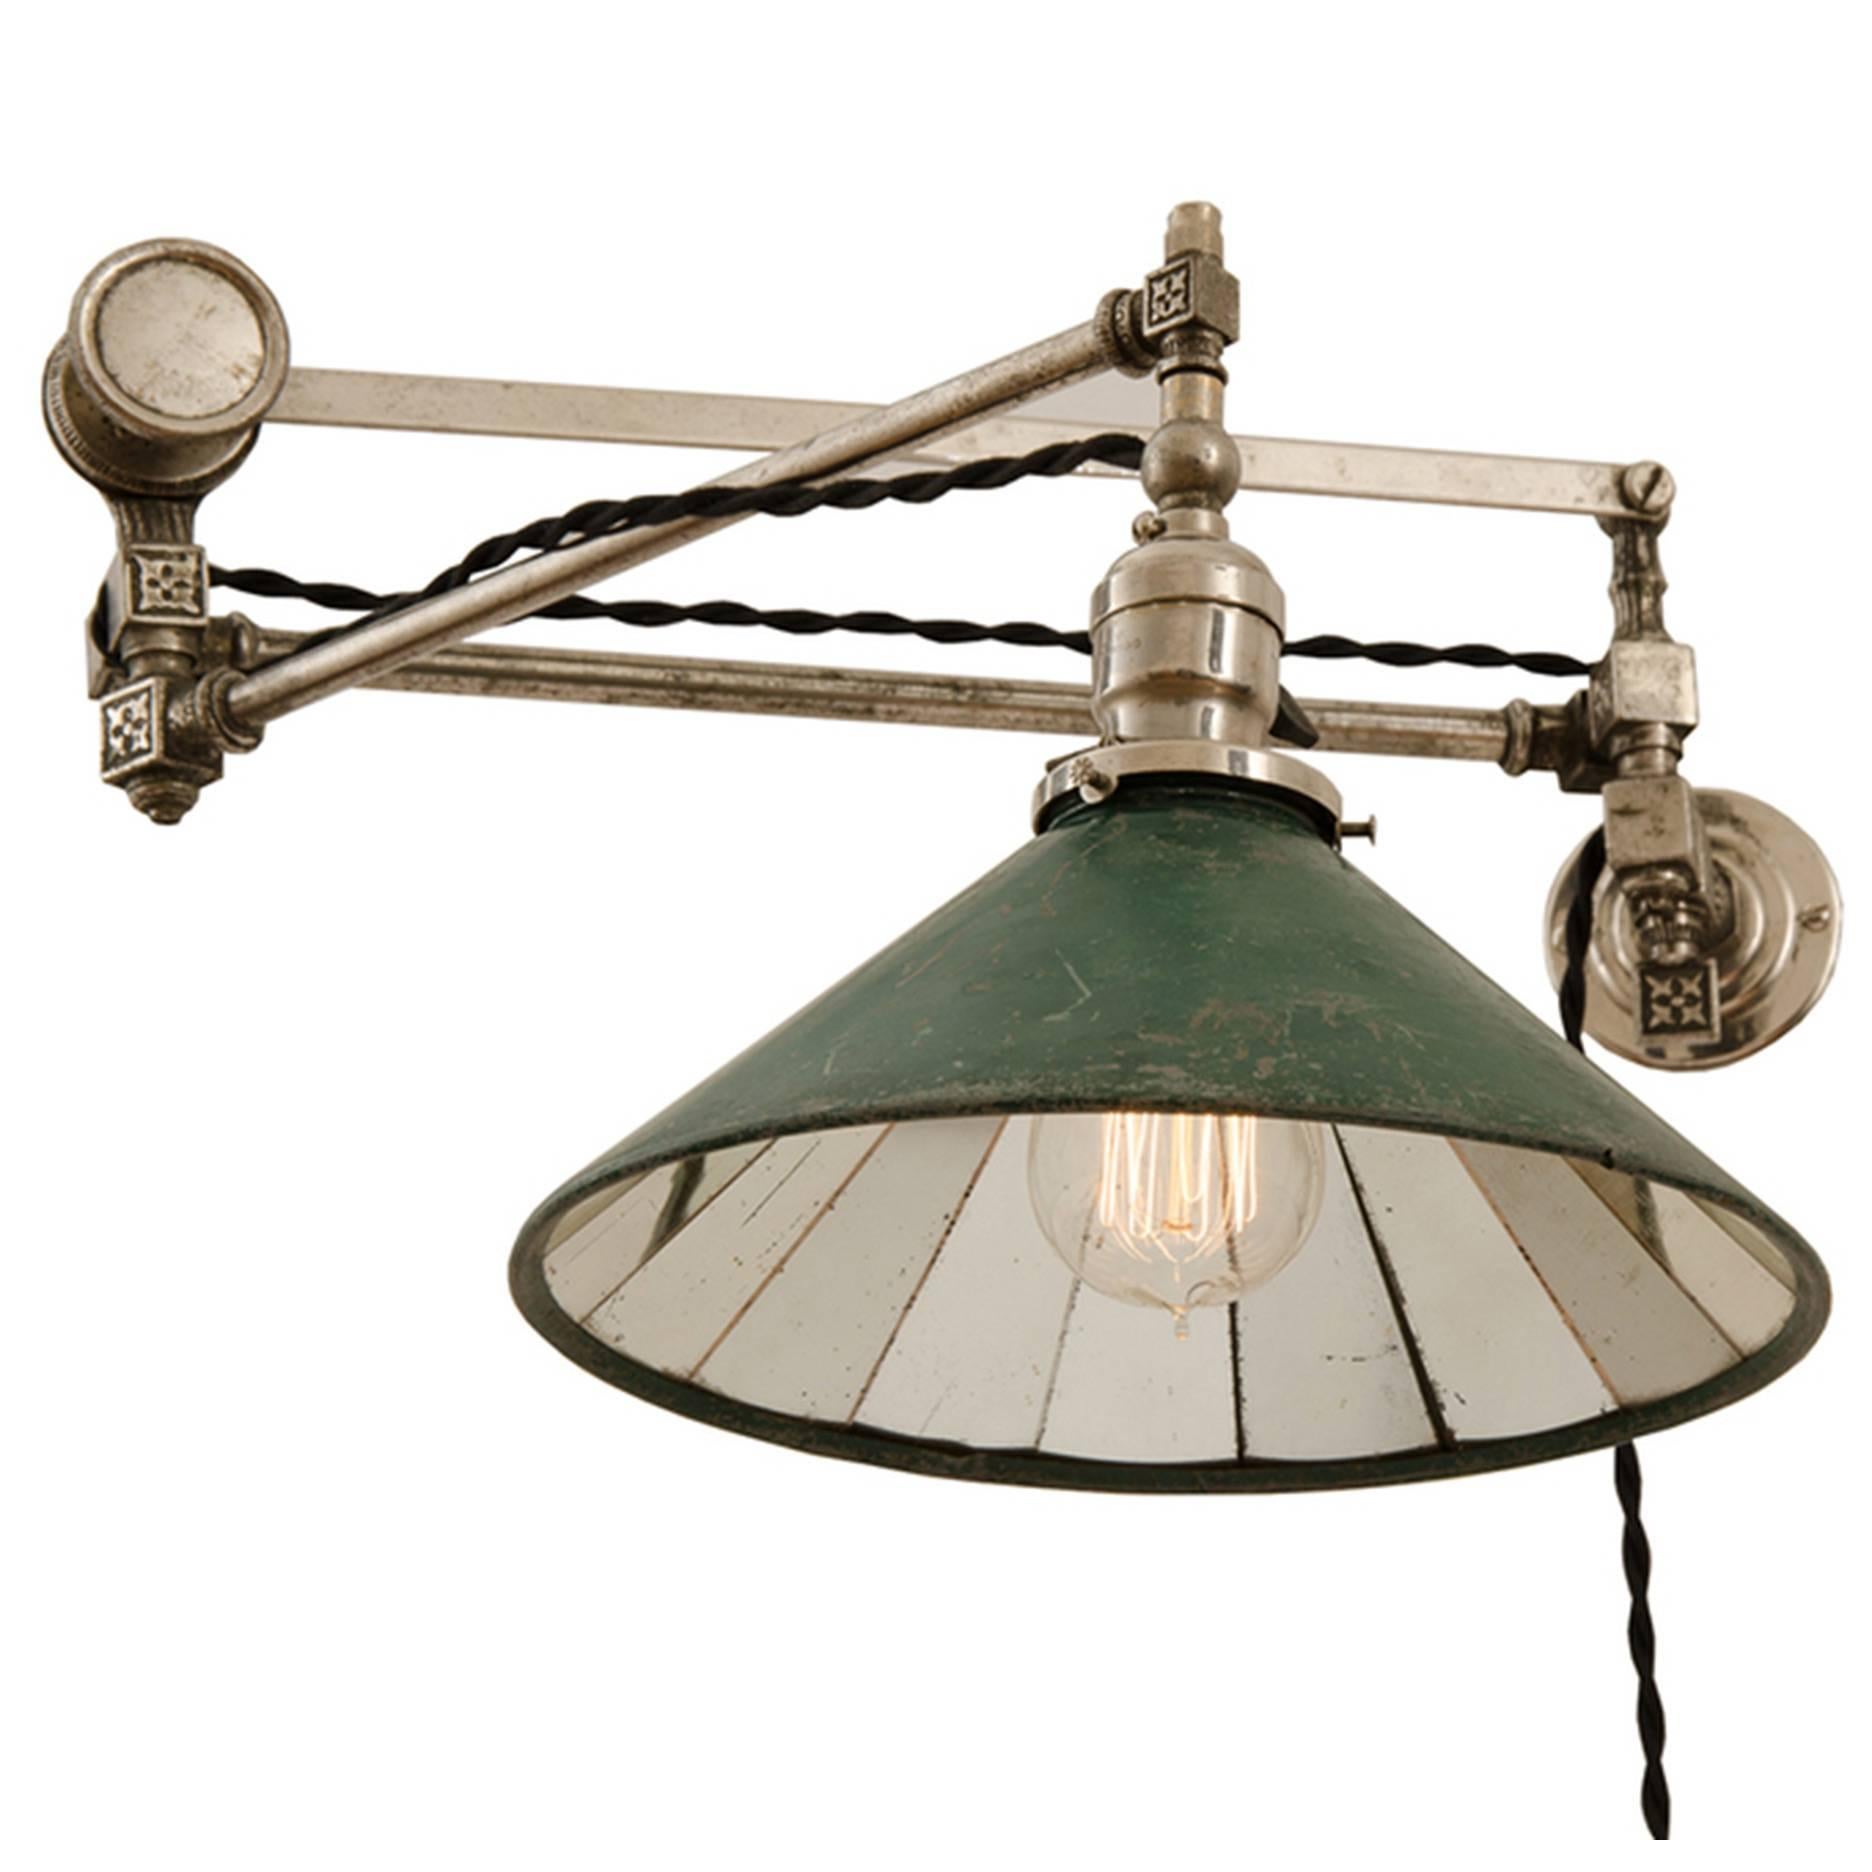 Incredible Nickel-Plated Articulating Lamp by Beardslee, circa 1895